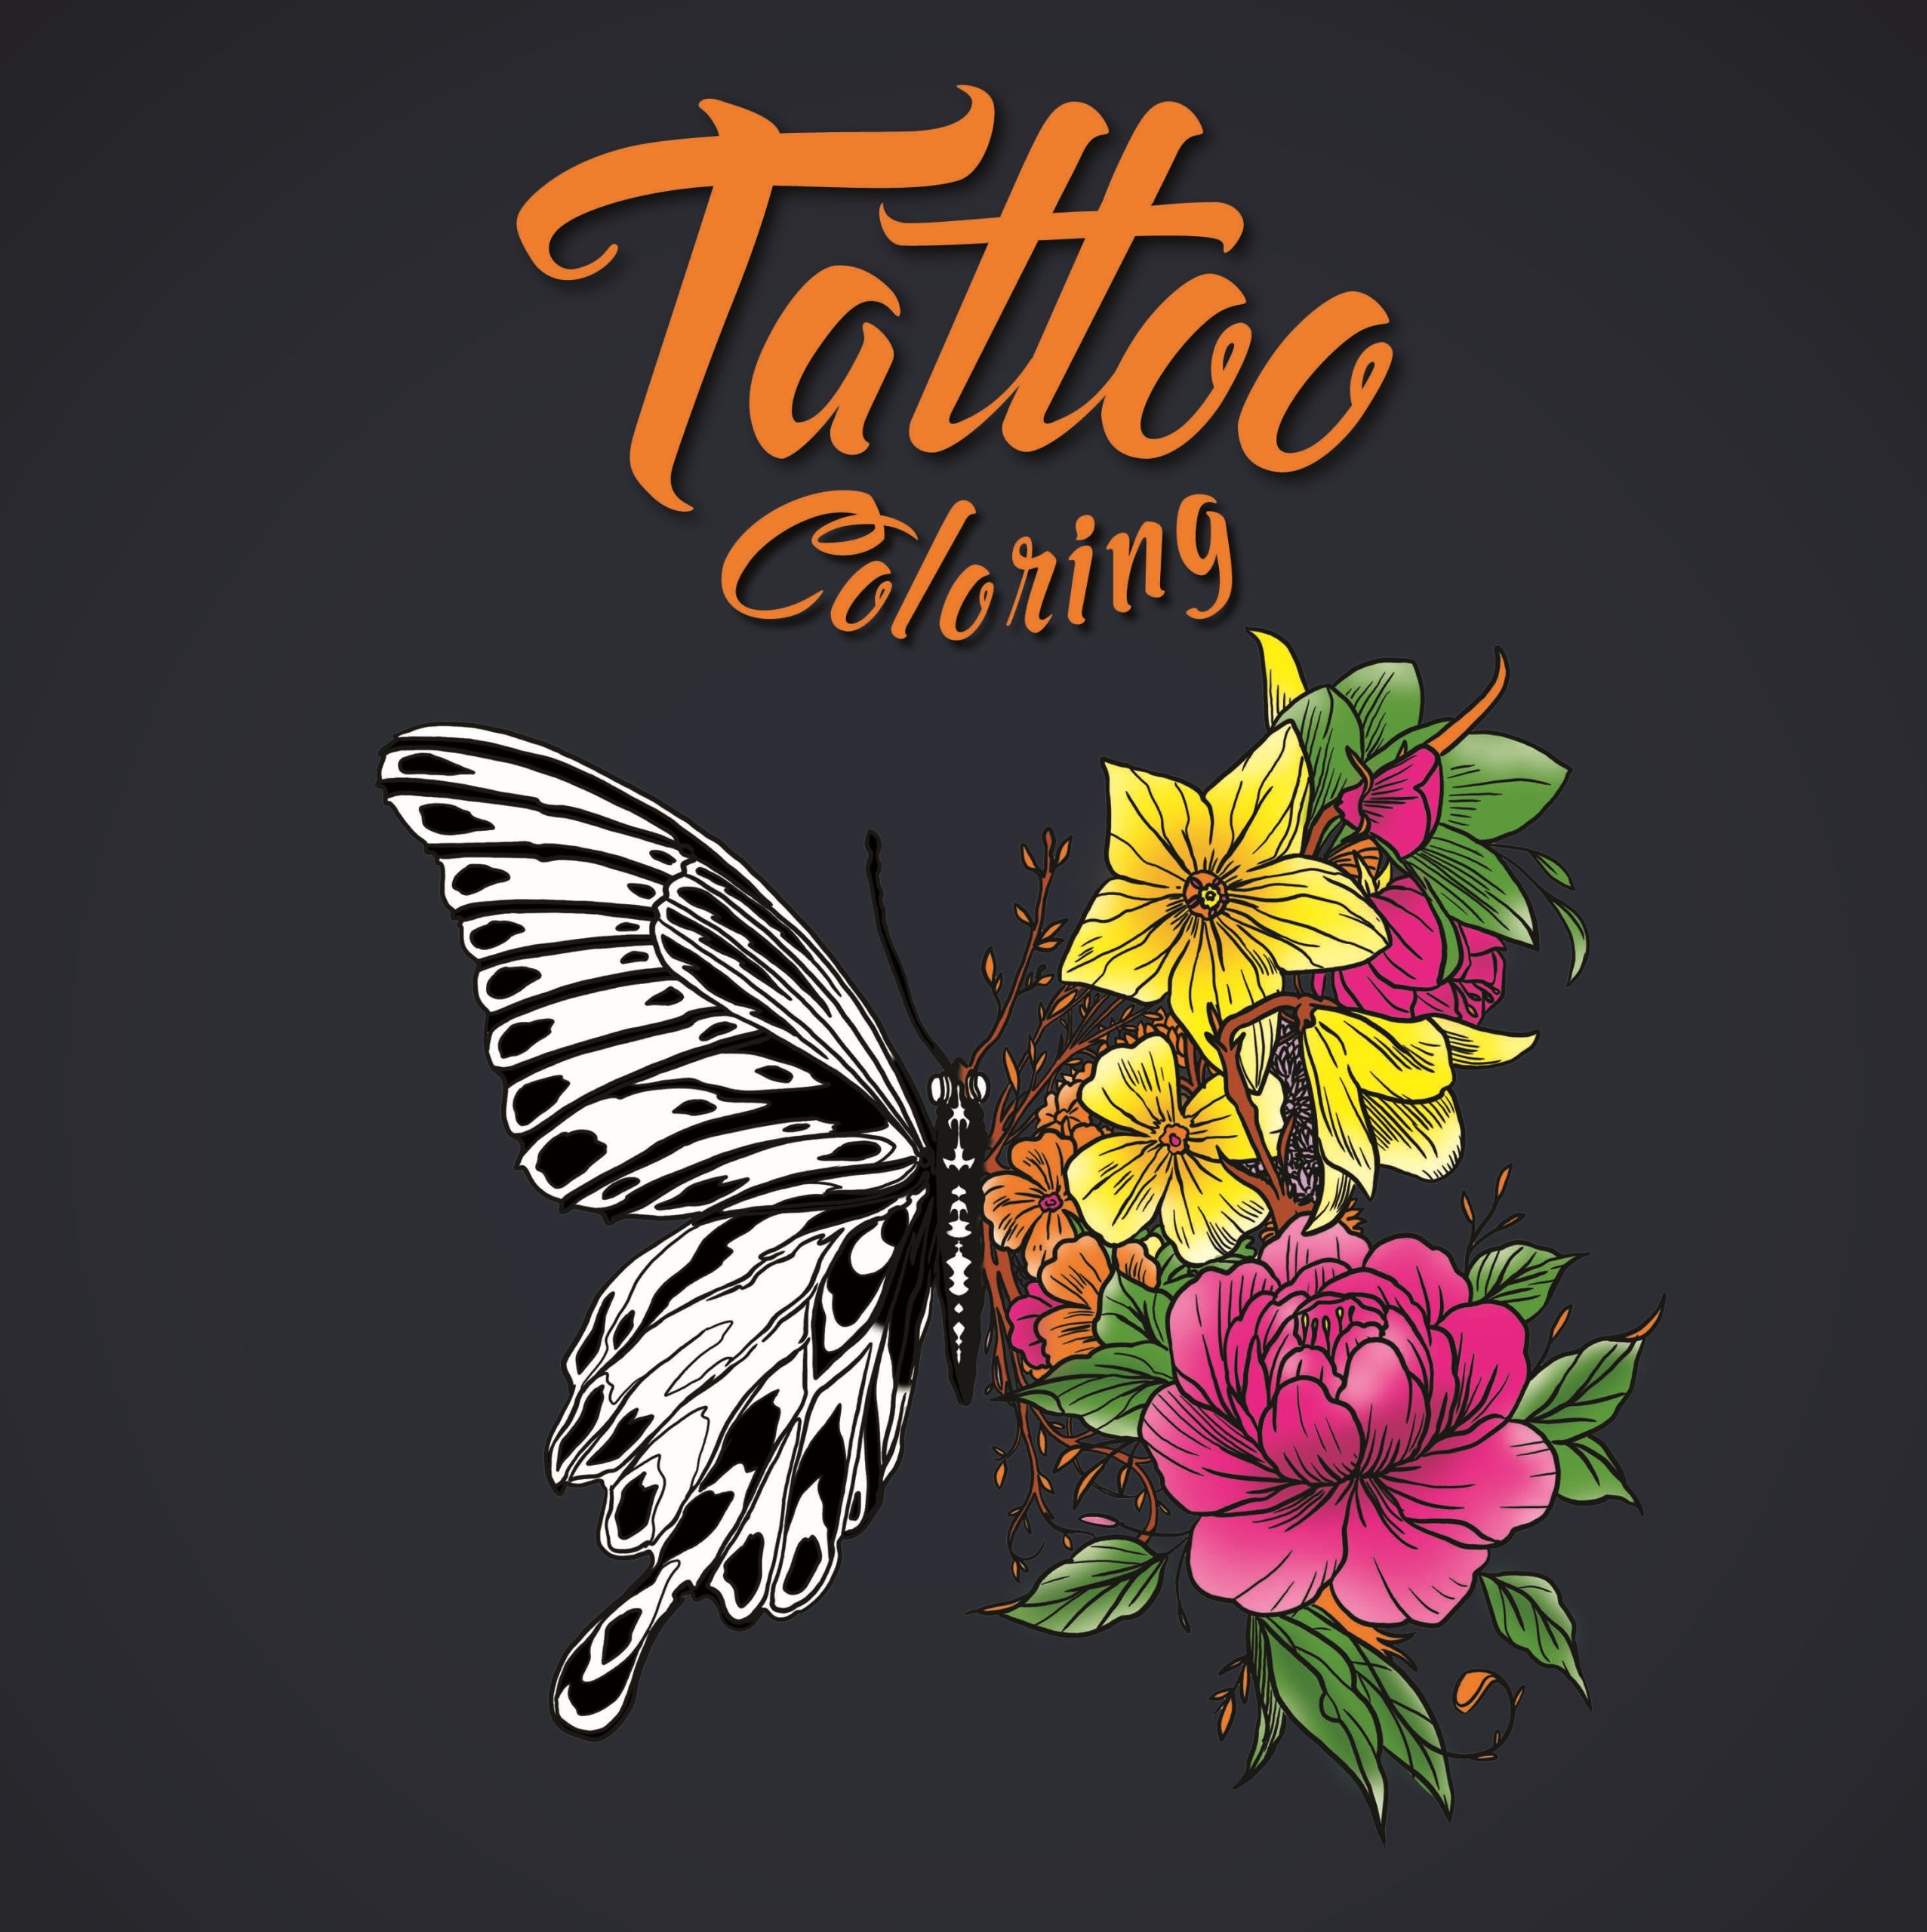 tattoo design flash books Old School TATTOO Reference | eBay